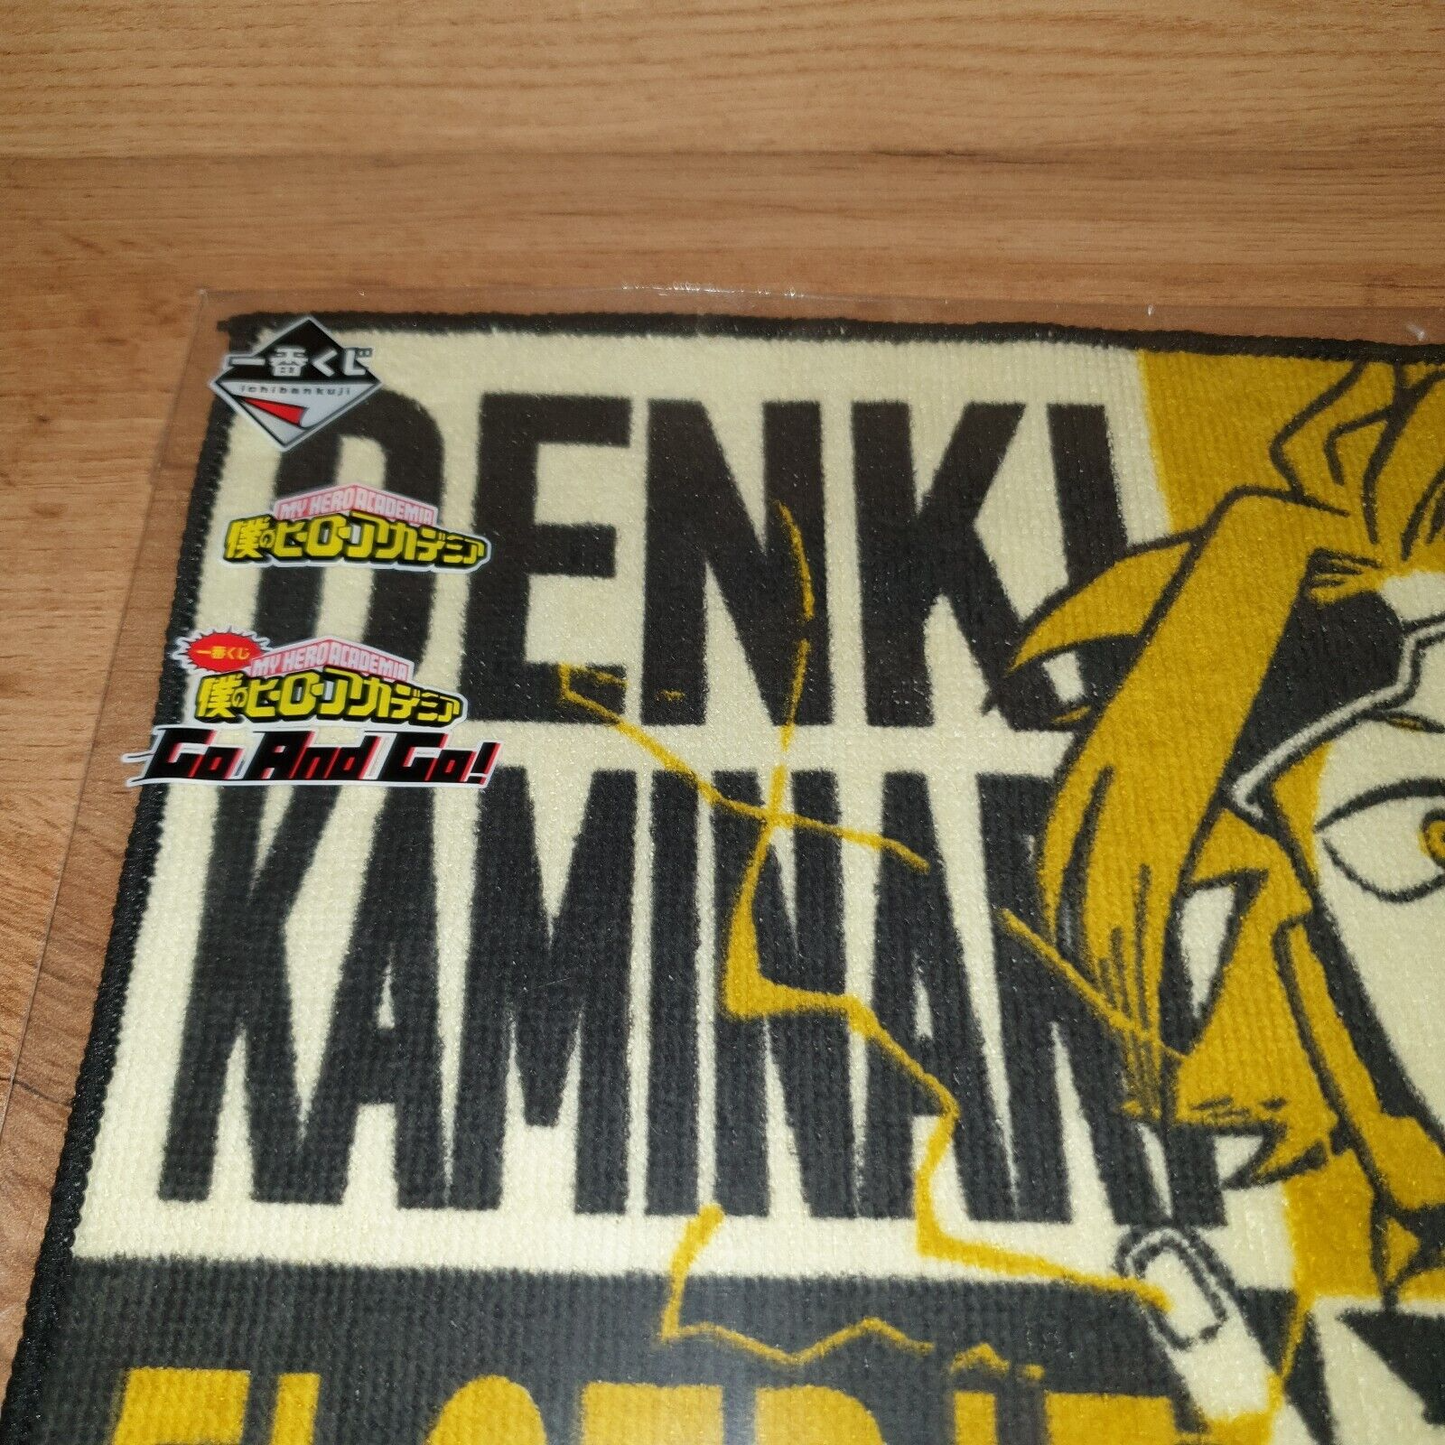 My Hero Academia Denki Kaminari Display Towel